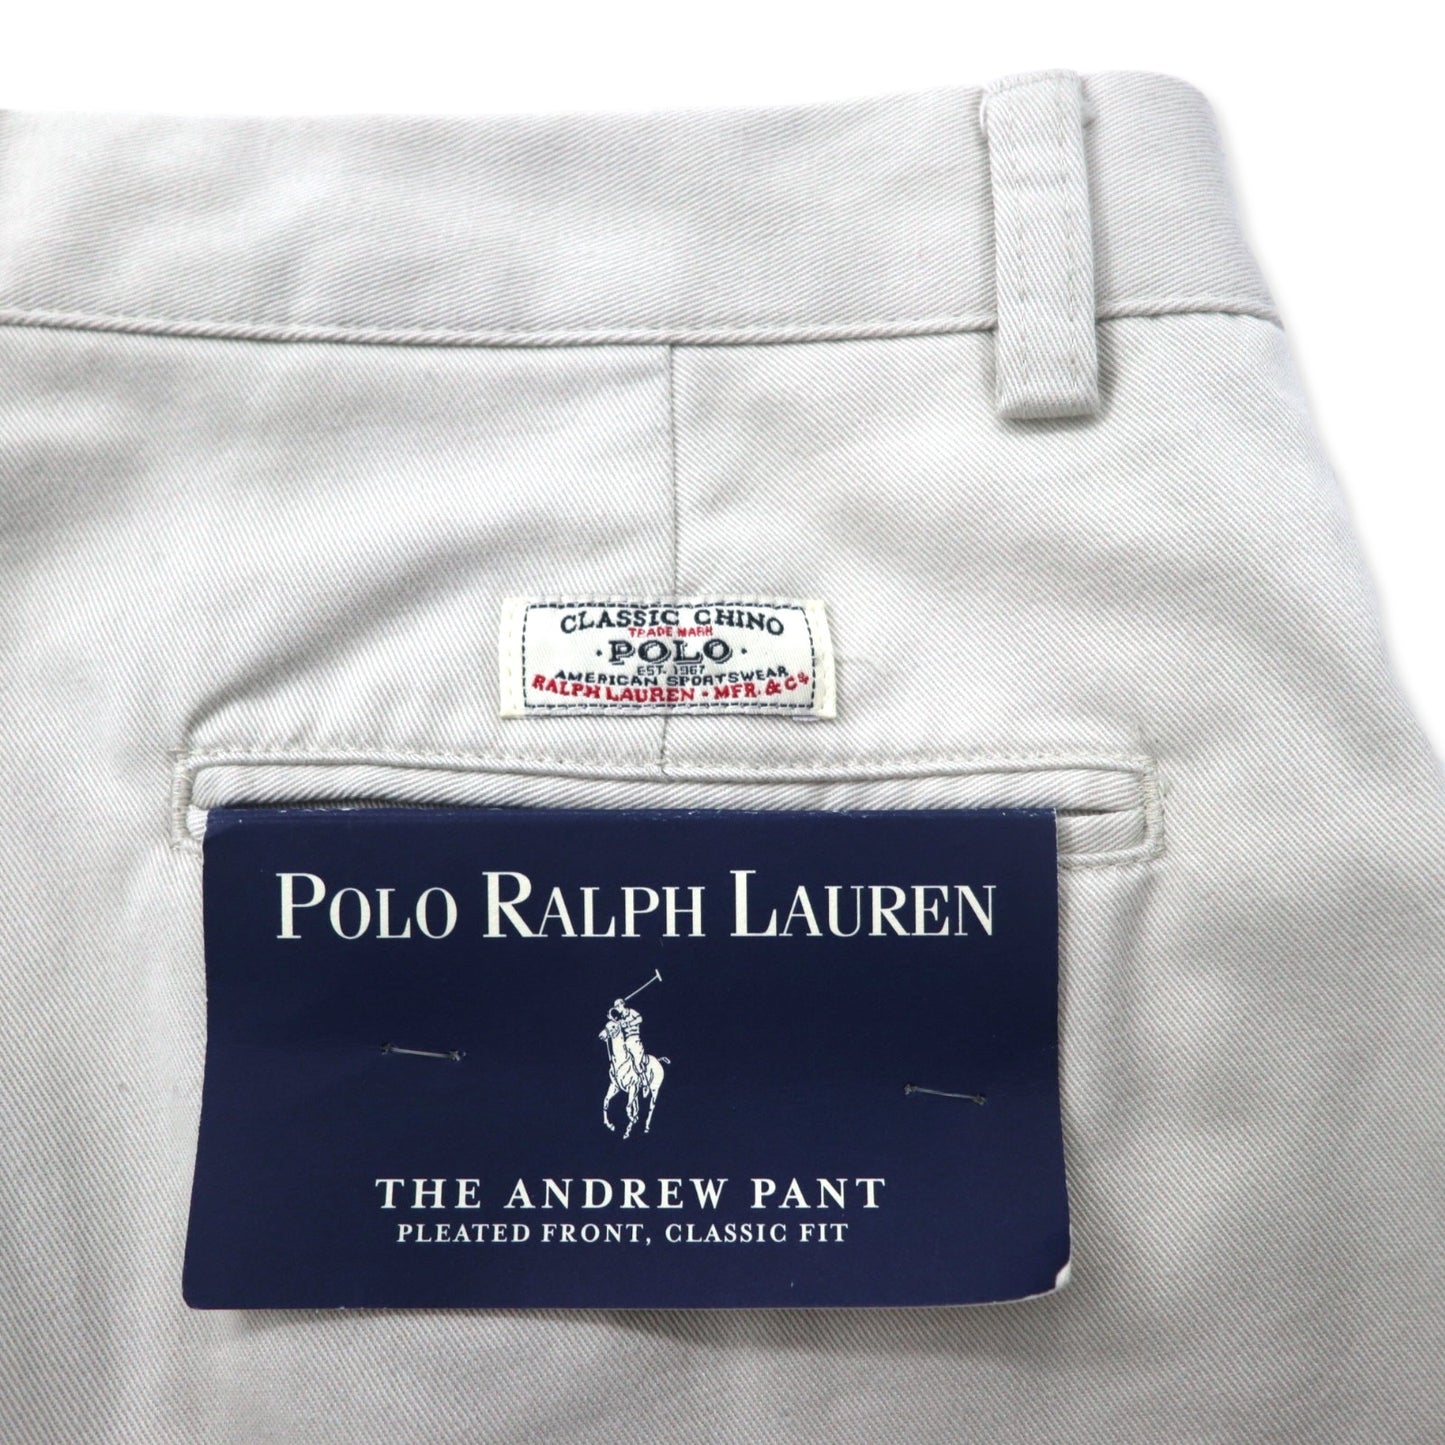 Polo by Ralph Lauren 2タック チノパンツ 32 ベージュ コットン ANDREW PANT 未使用品